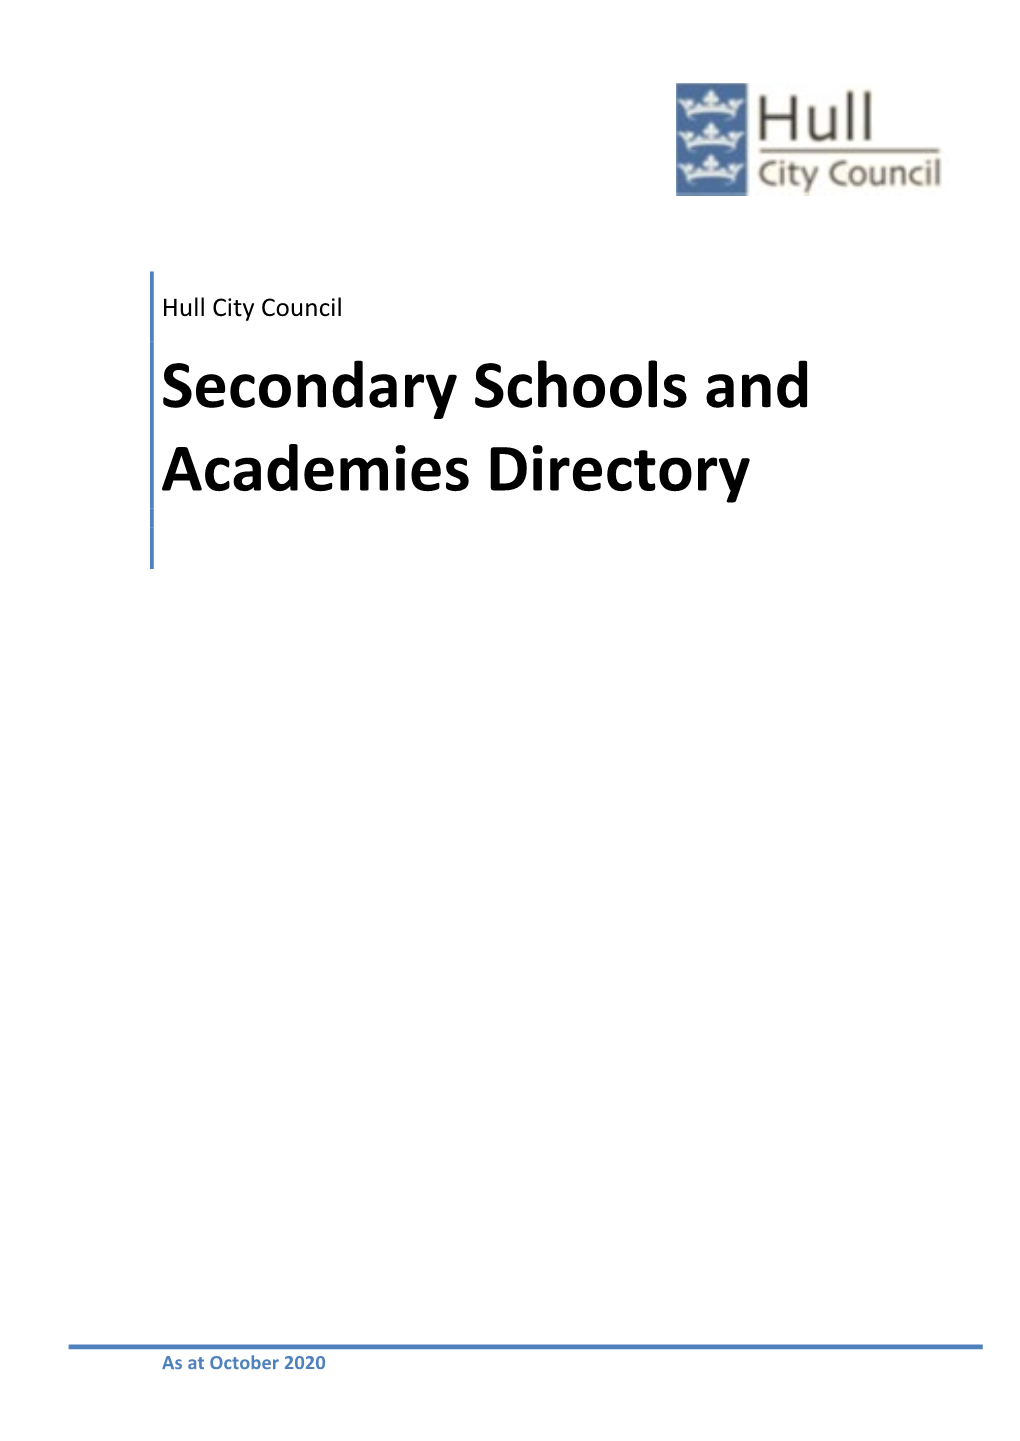 Secondary Schools and Academies Directory